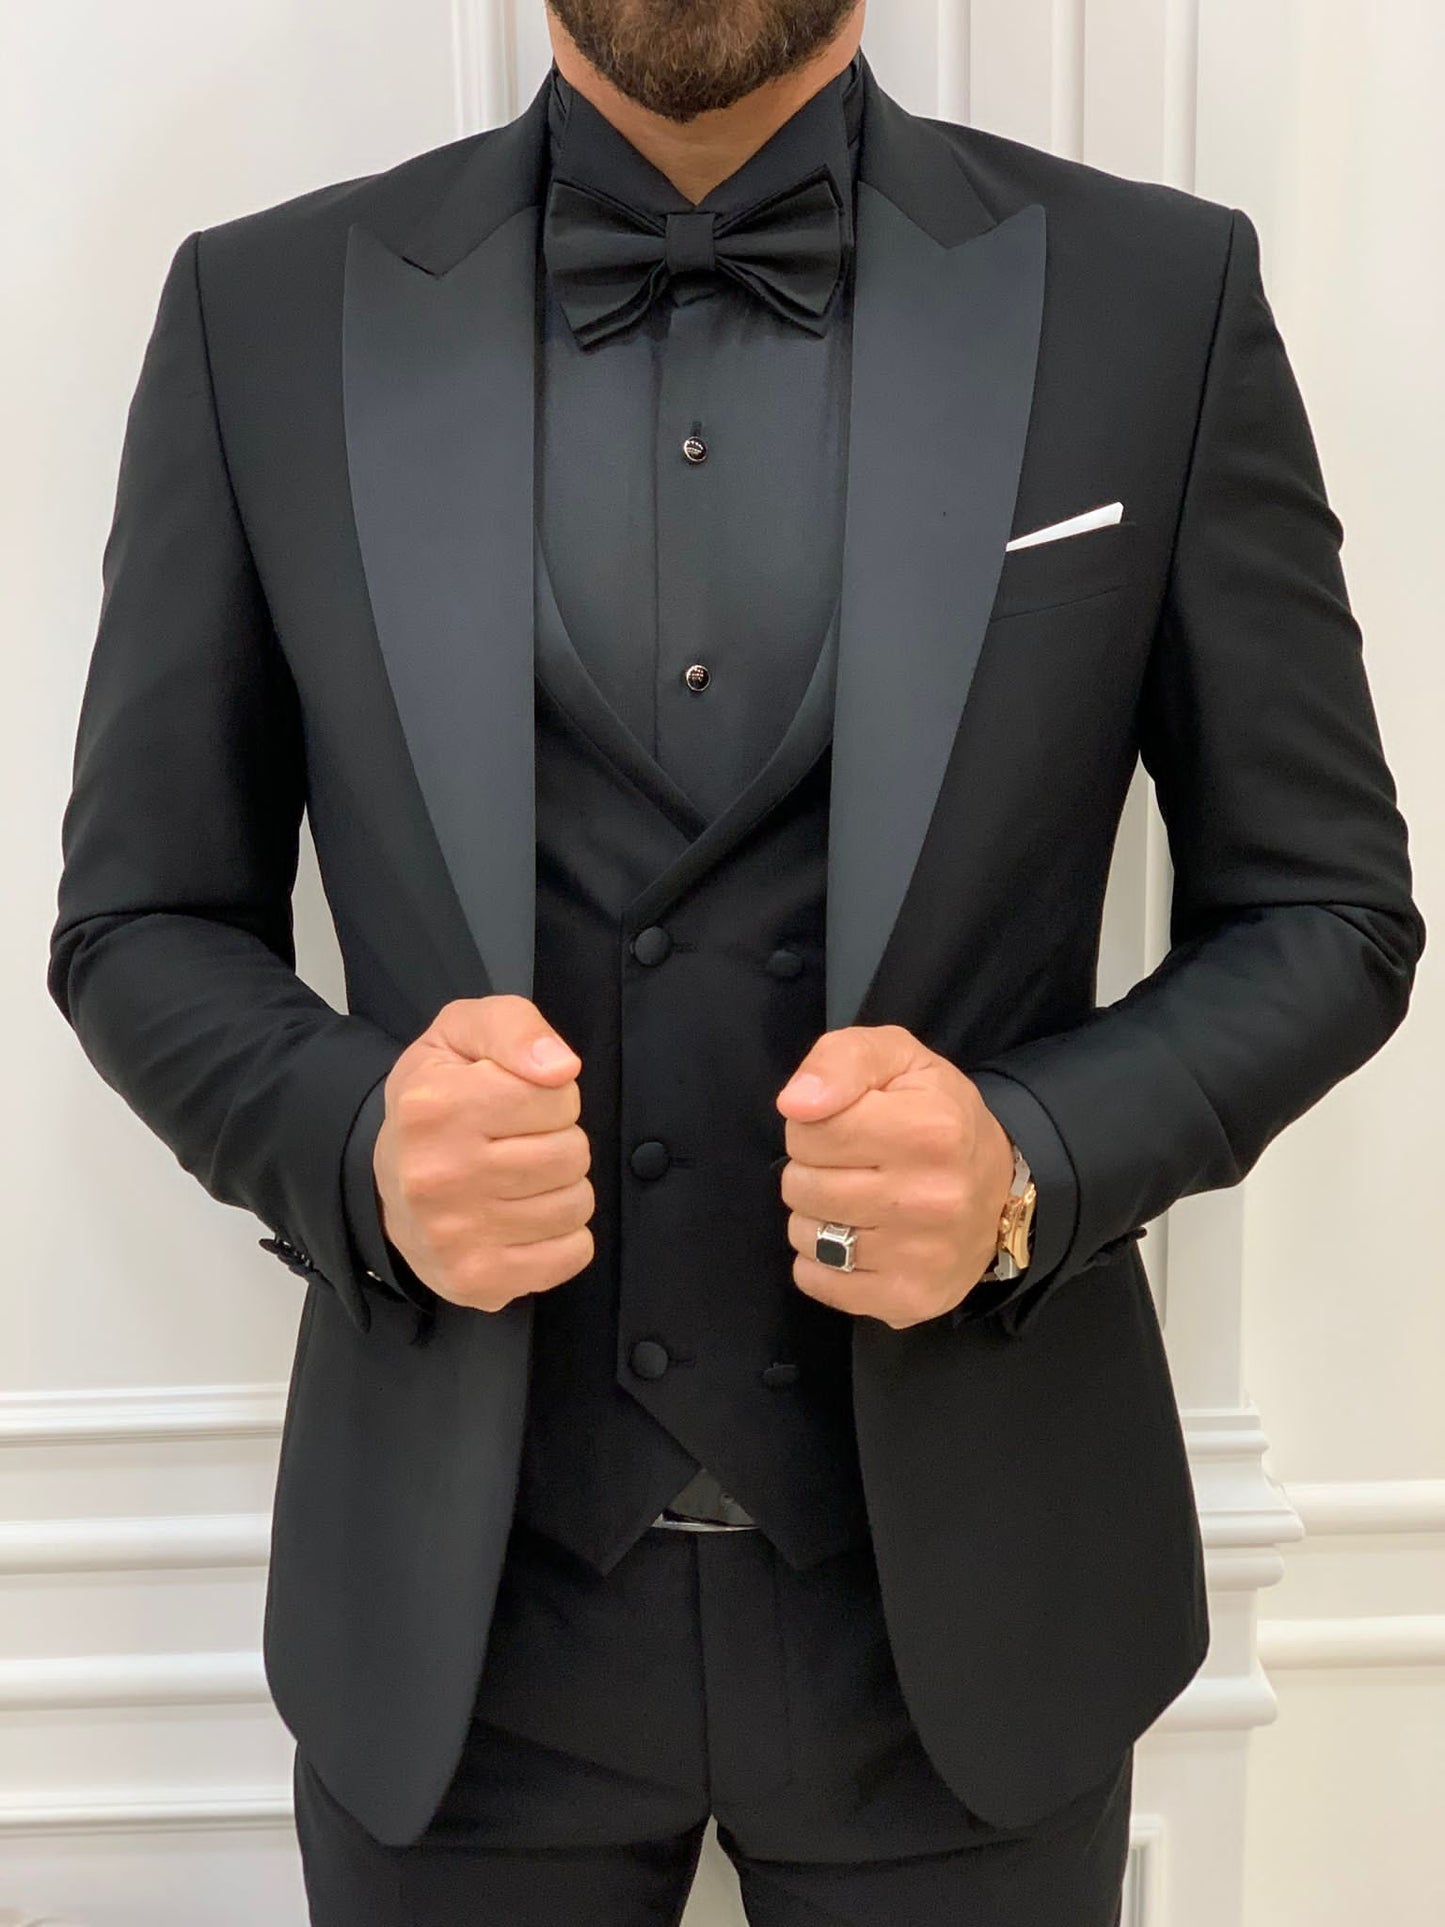 HolloMen Royal Black Tuxedo